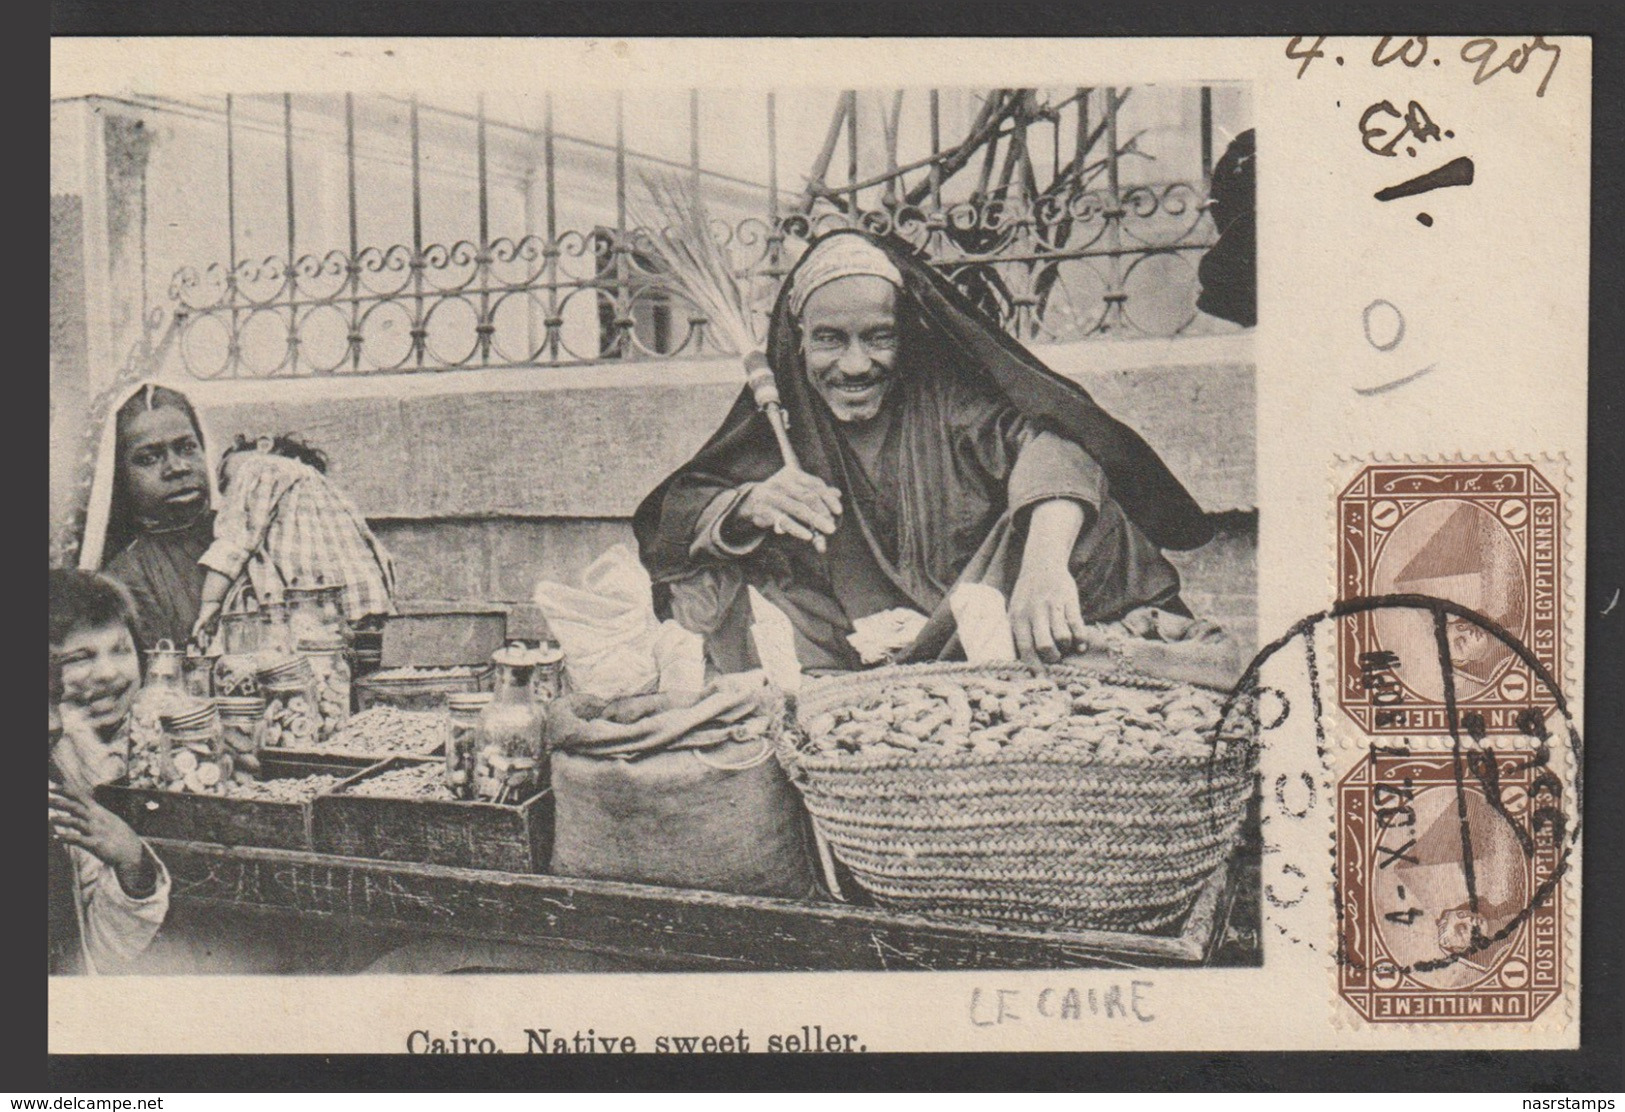 Egypt - 1907 - Very Rare - Vintage Post Card - Native Sweet Seller - Cairo - 1866-1914 Khedivate Of Egypt